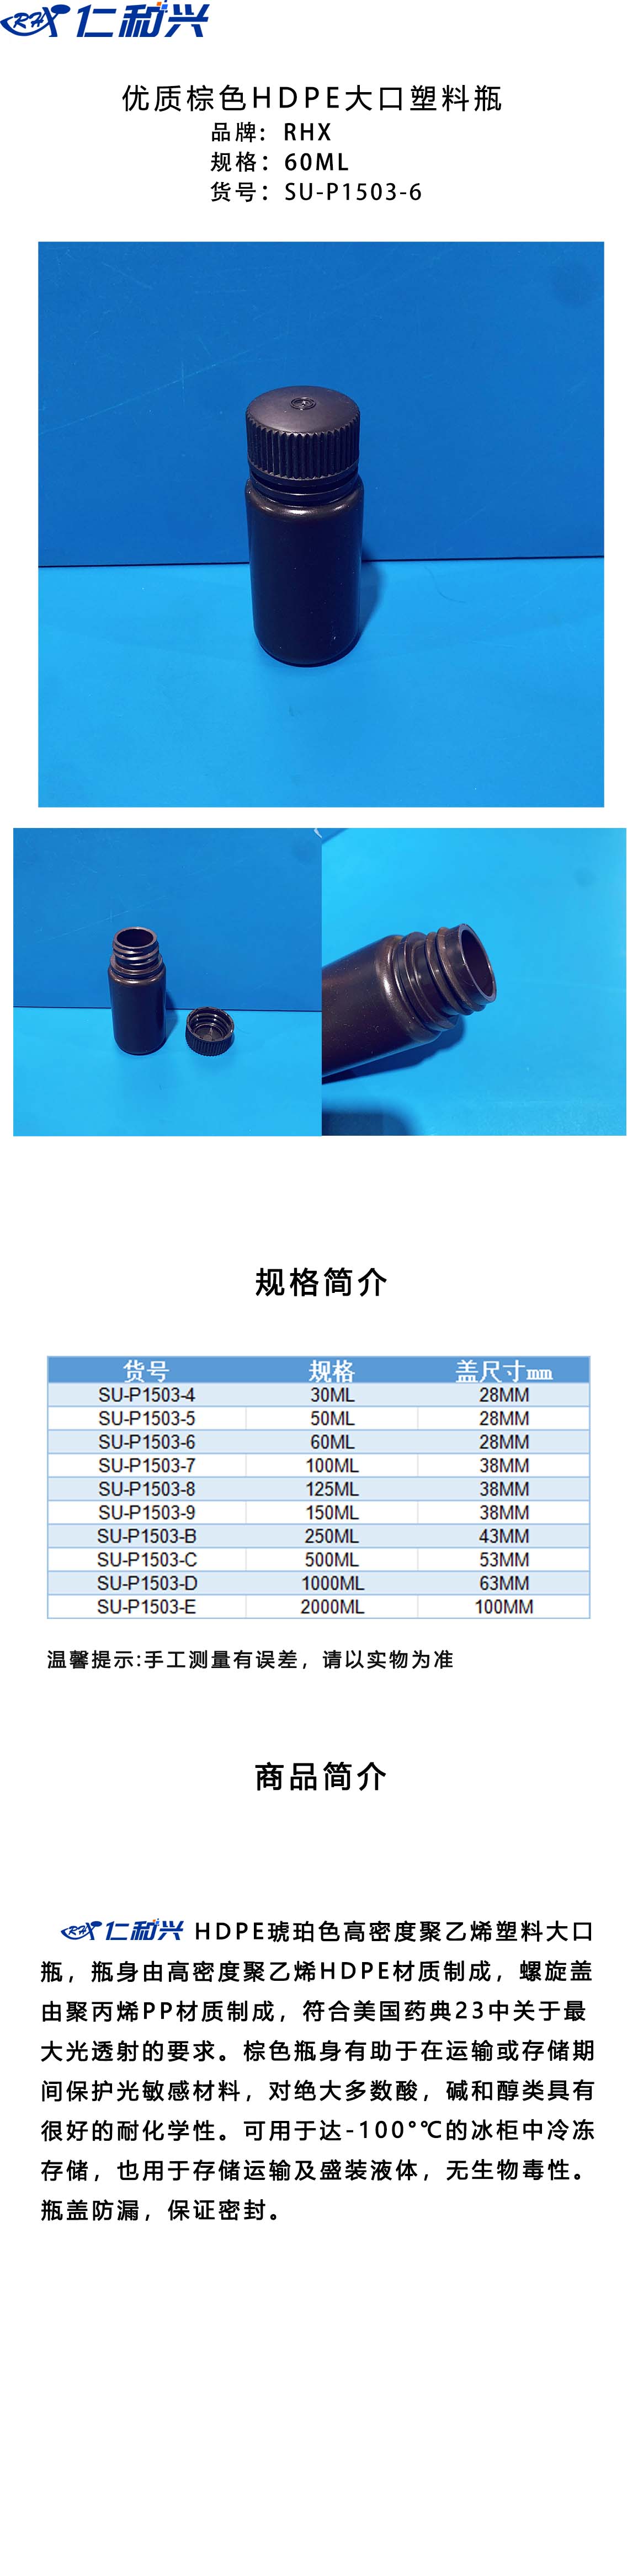 SU-P1503-6 棕色HDPE 大口塑料瓶 长图模板.jpg